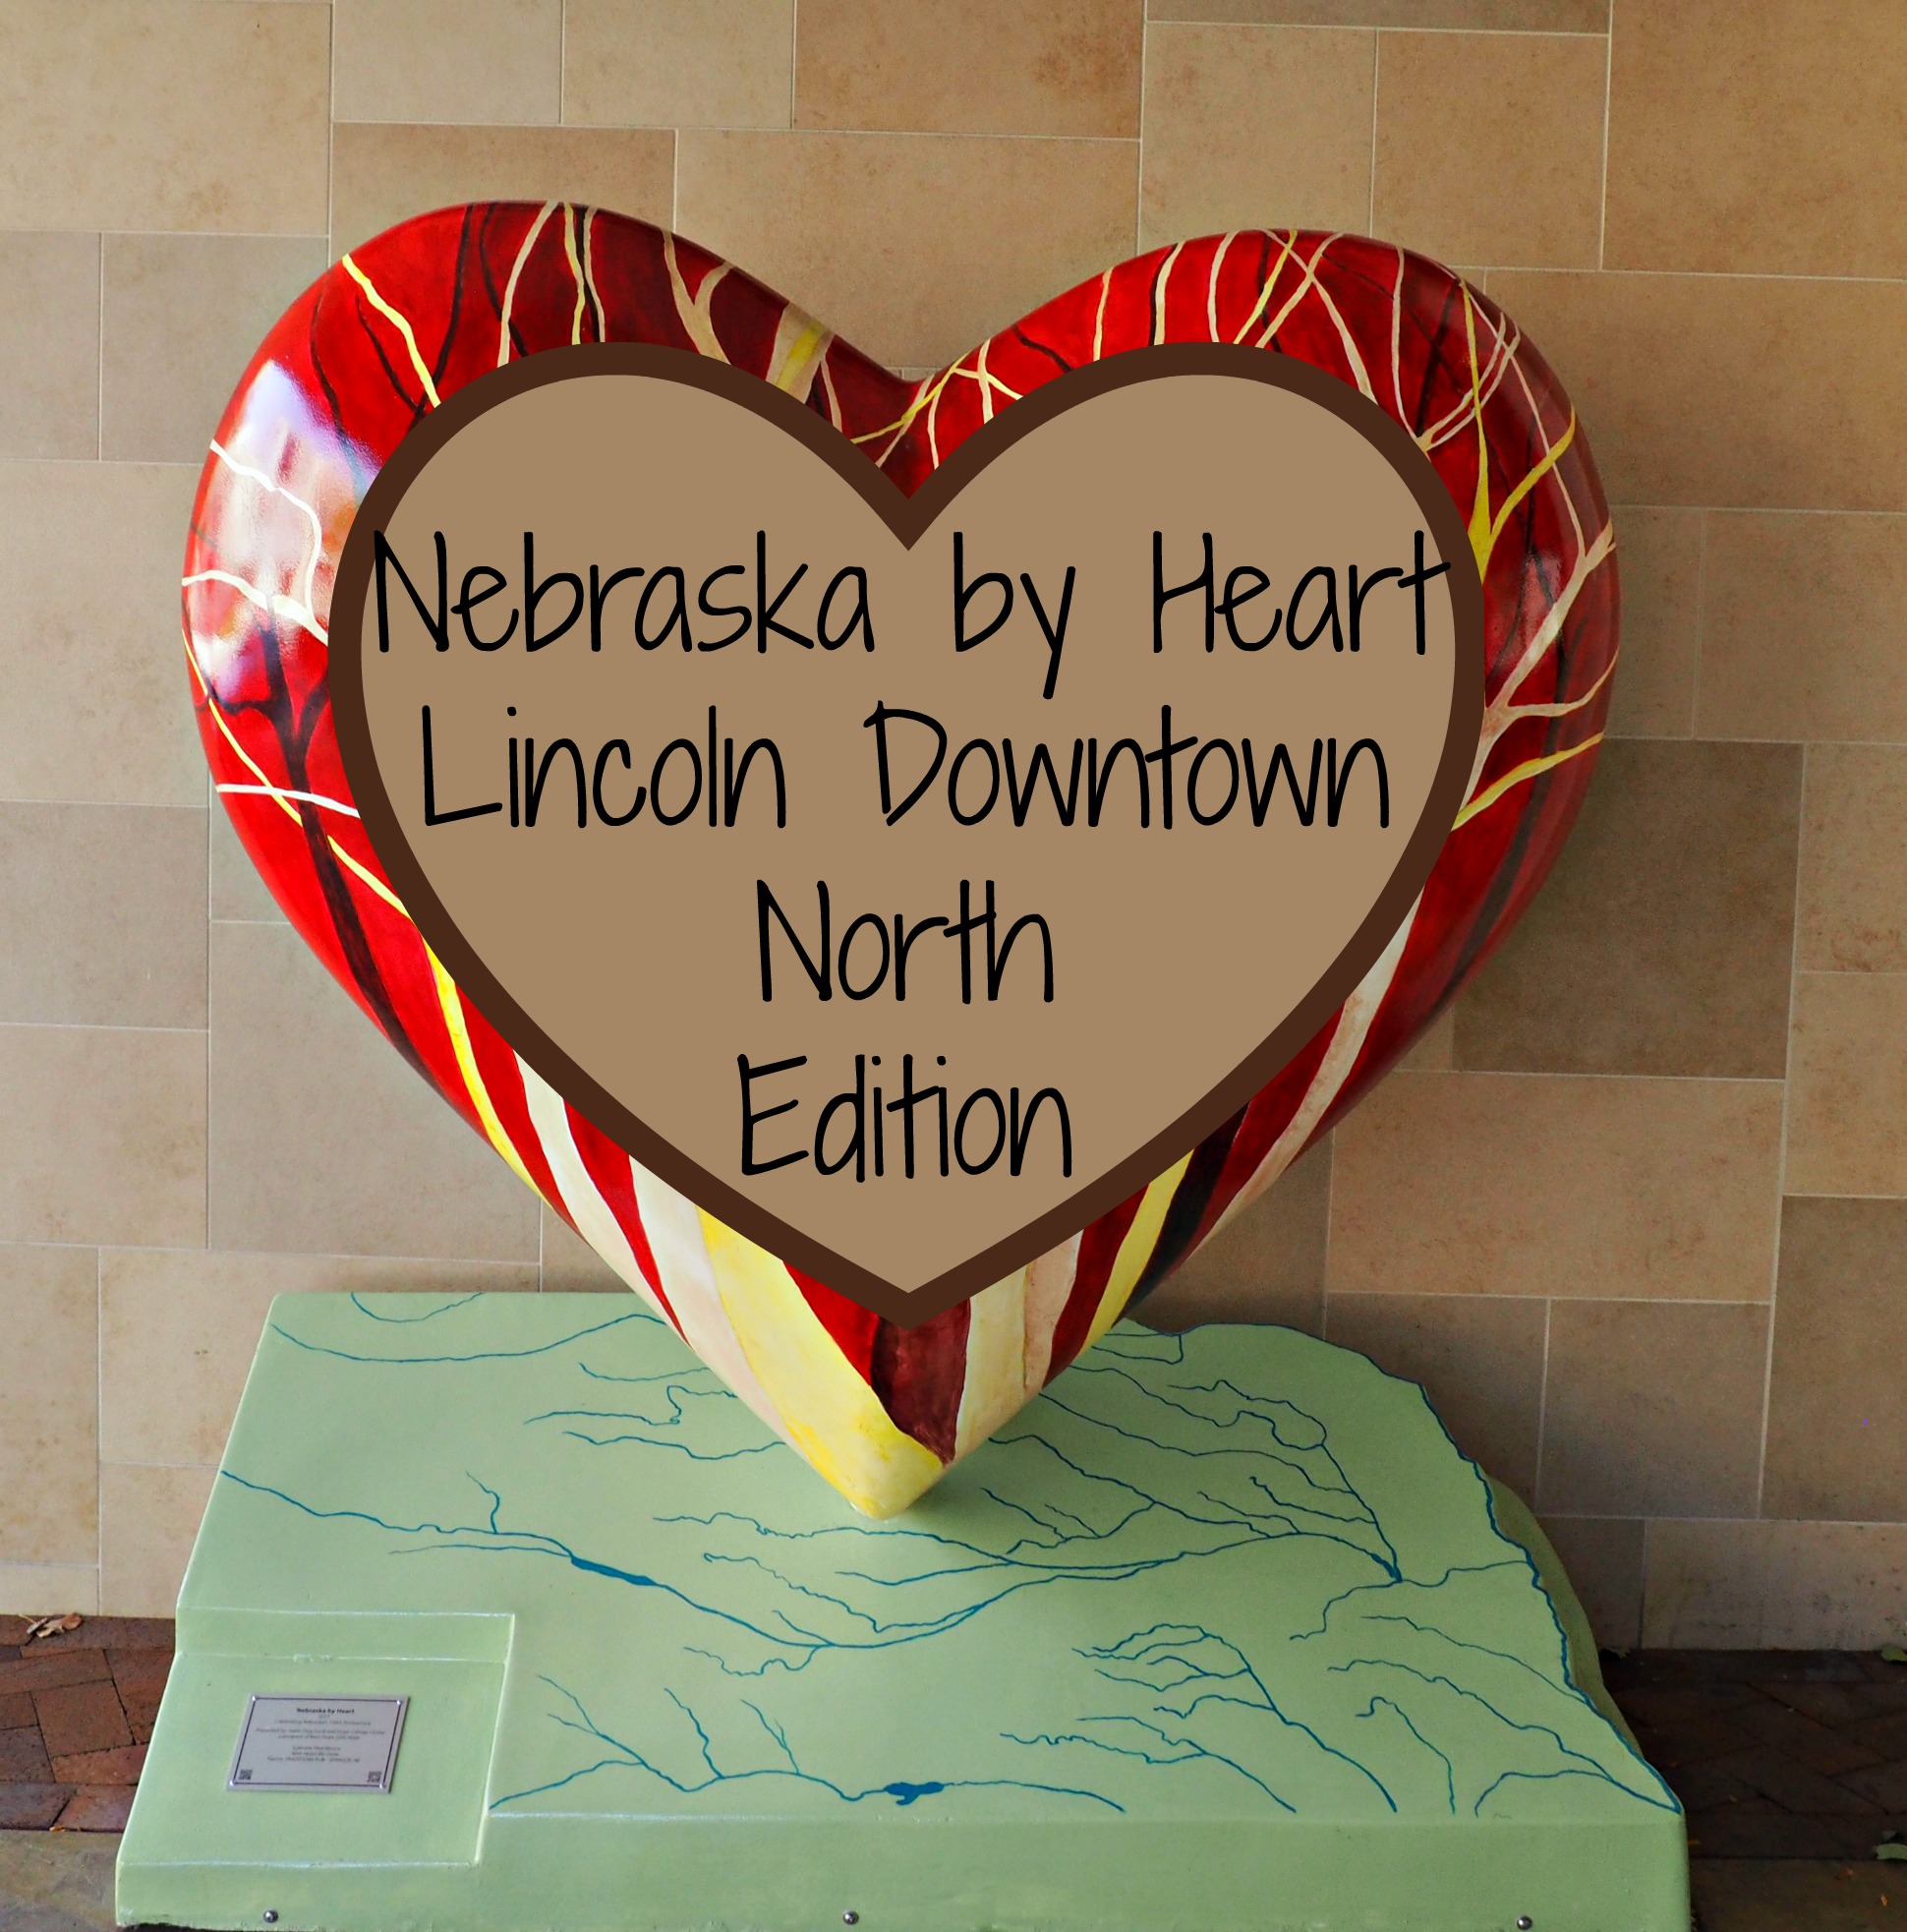 Nebraska by Heart Downtown North